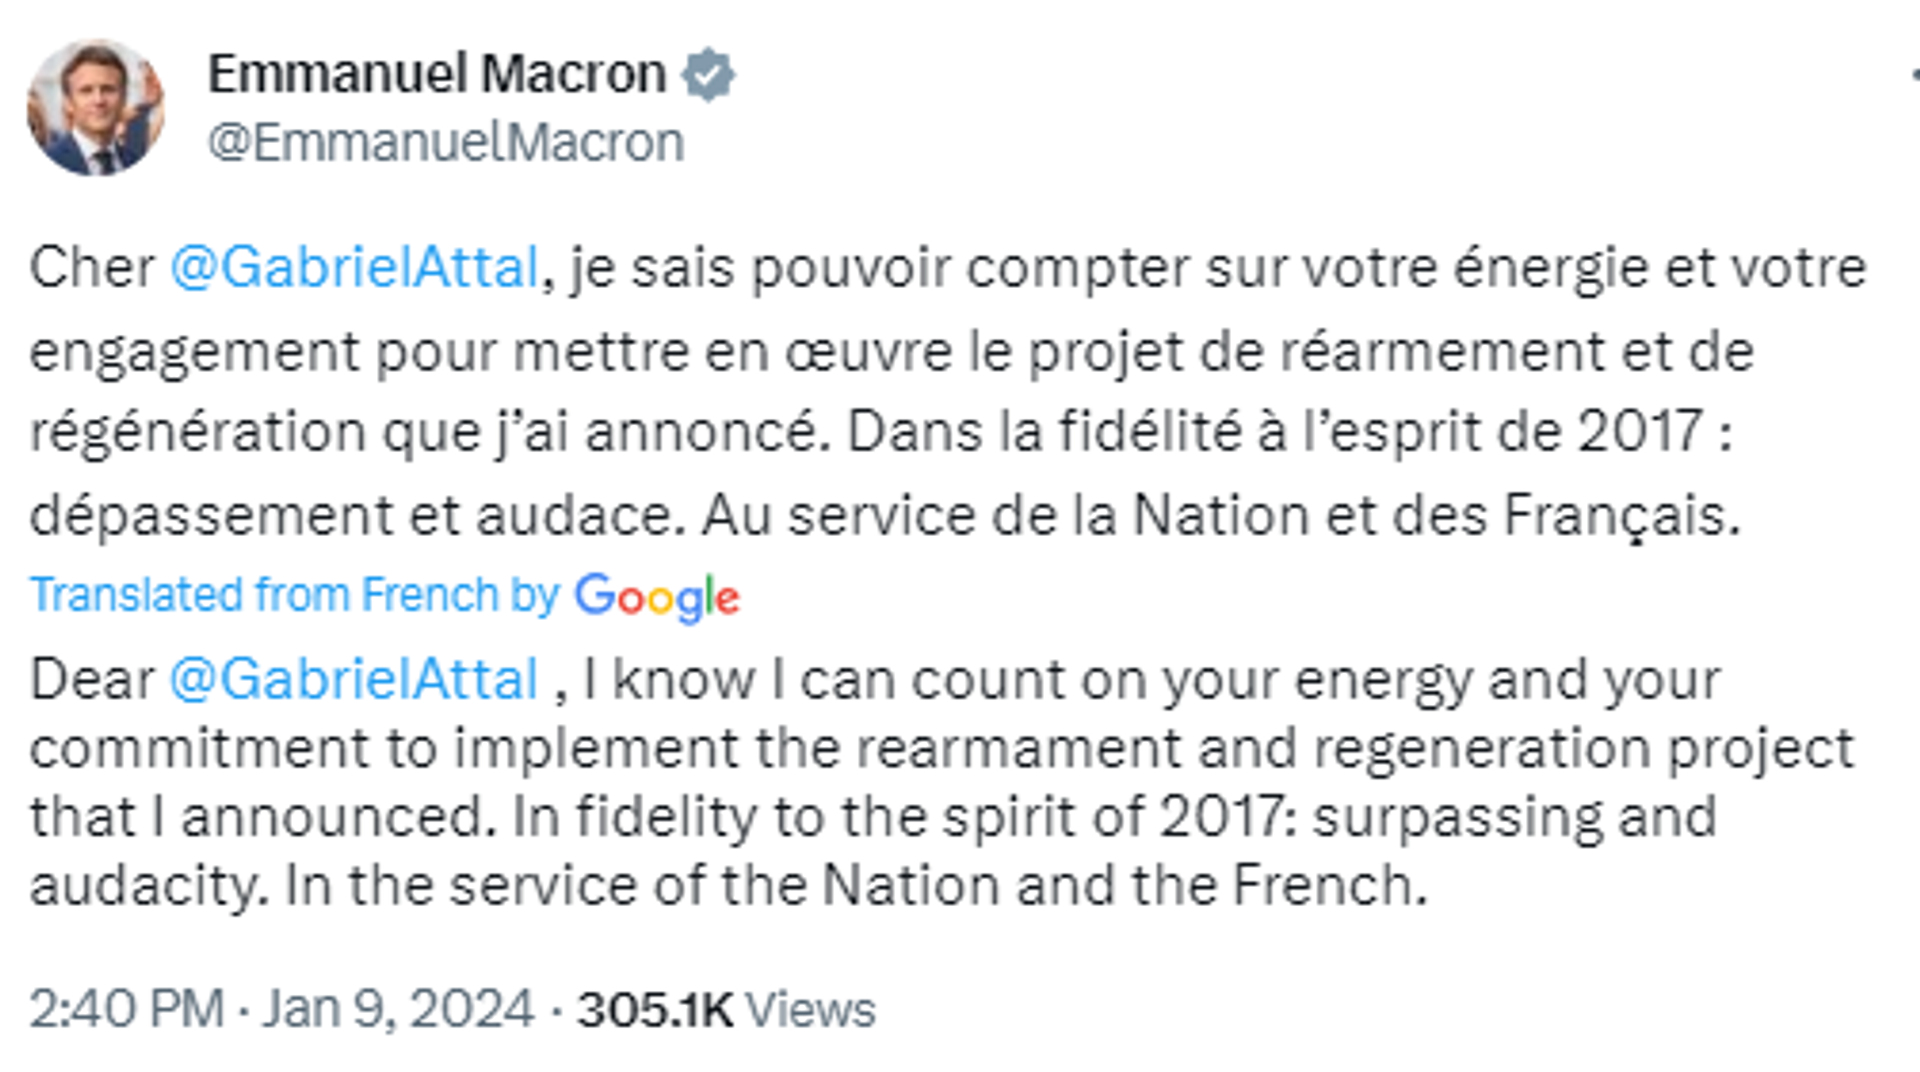 Screenshot of X post by Frech President Emmanuel Macron. - Sputnik International, 1920, 09.01.2024